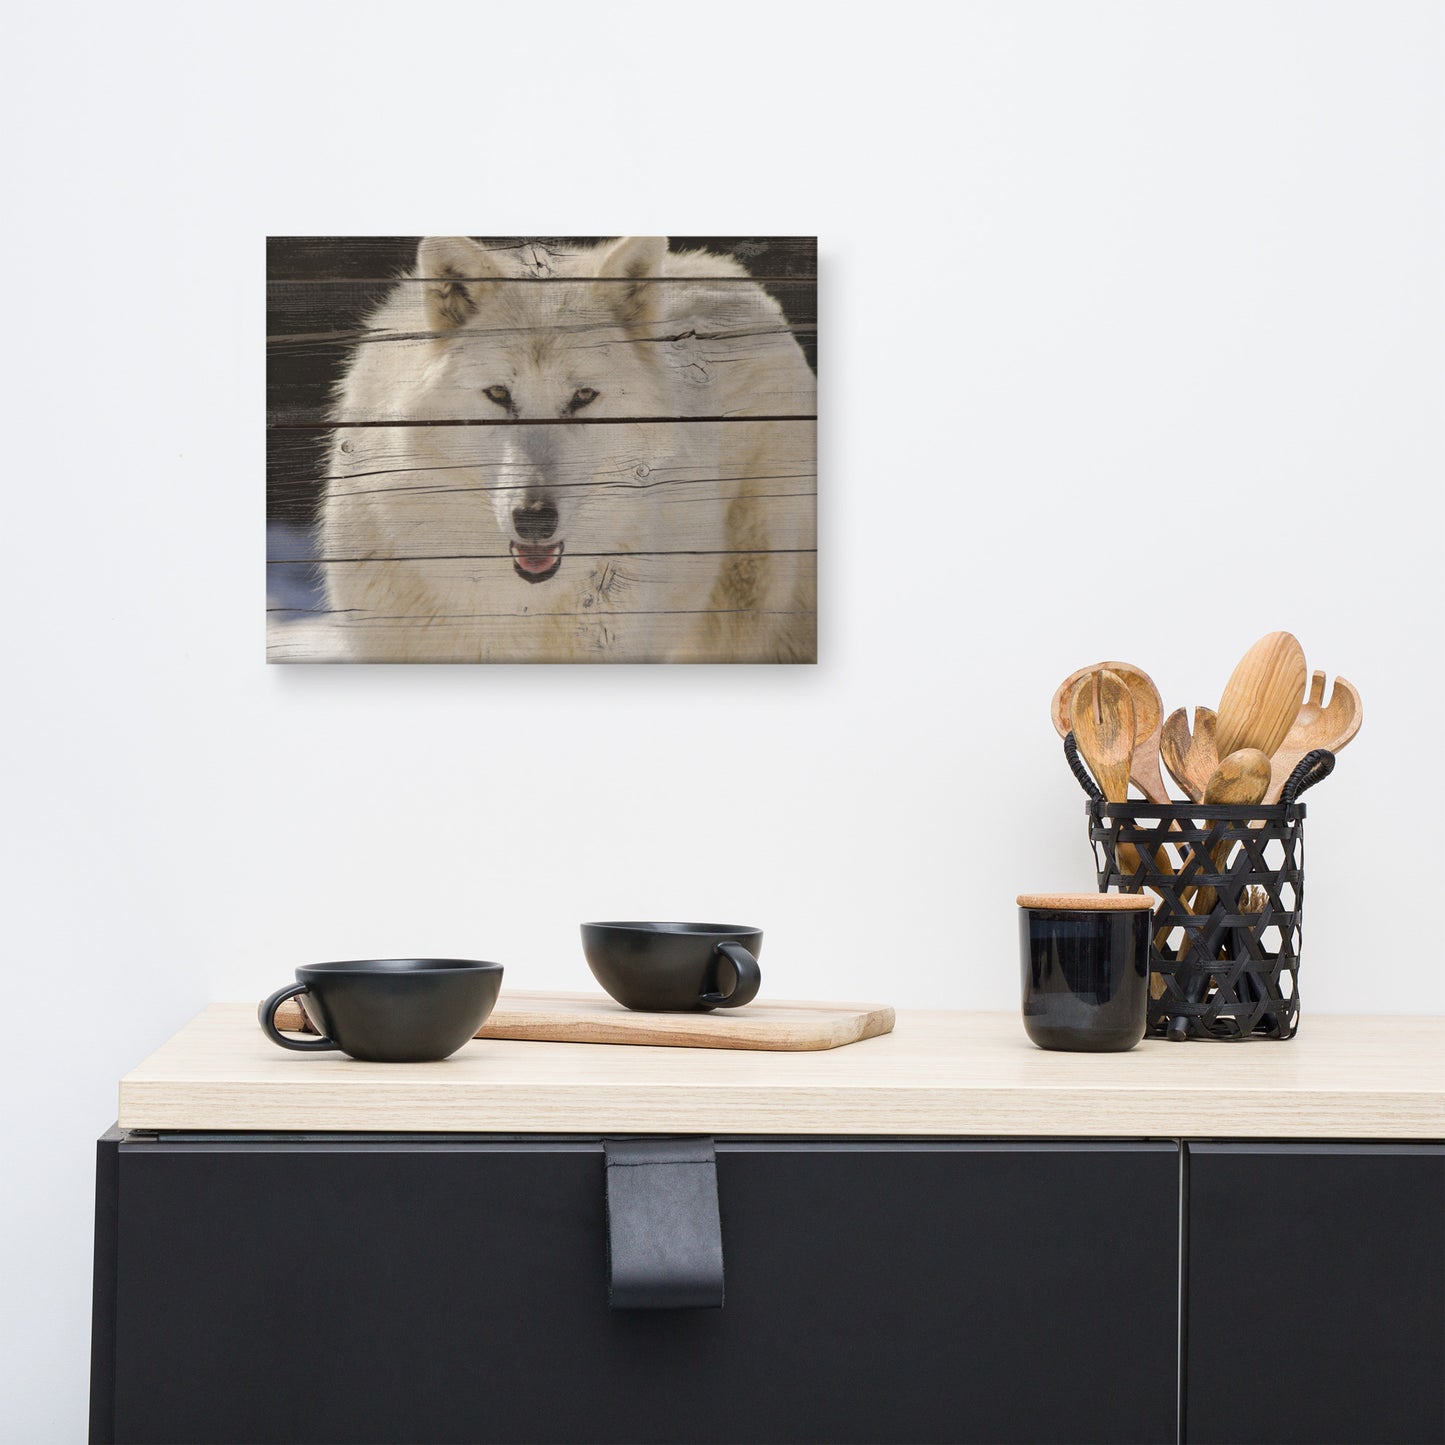 Minimalist Kitchen Wall Decor: White Wolf Portrait on Faux Weathered Wood Texture - Wildlife / Animal / Nature Photograph Canvas Wall Art Print - Artwork